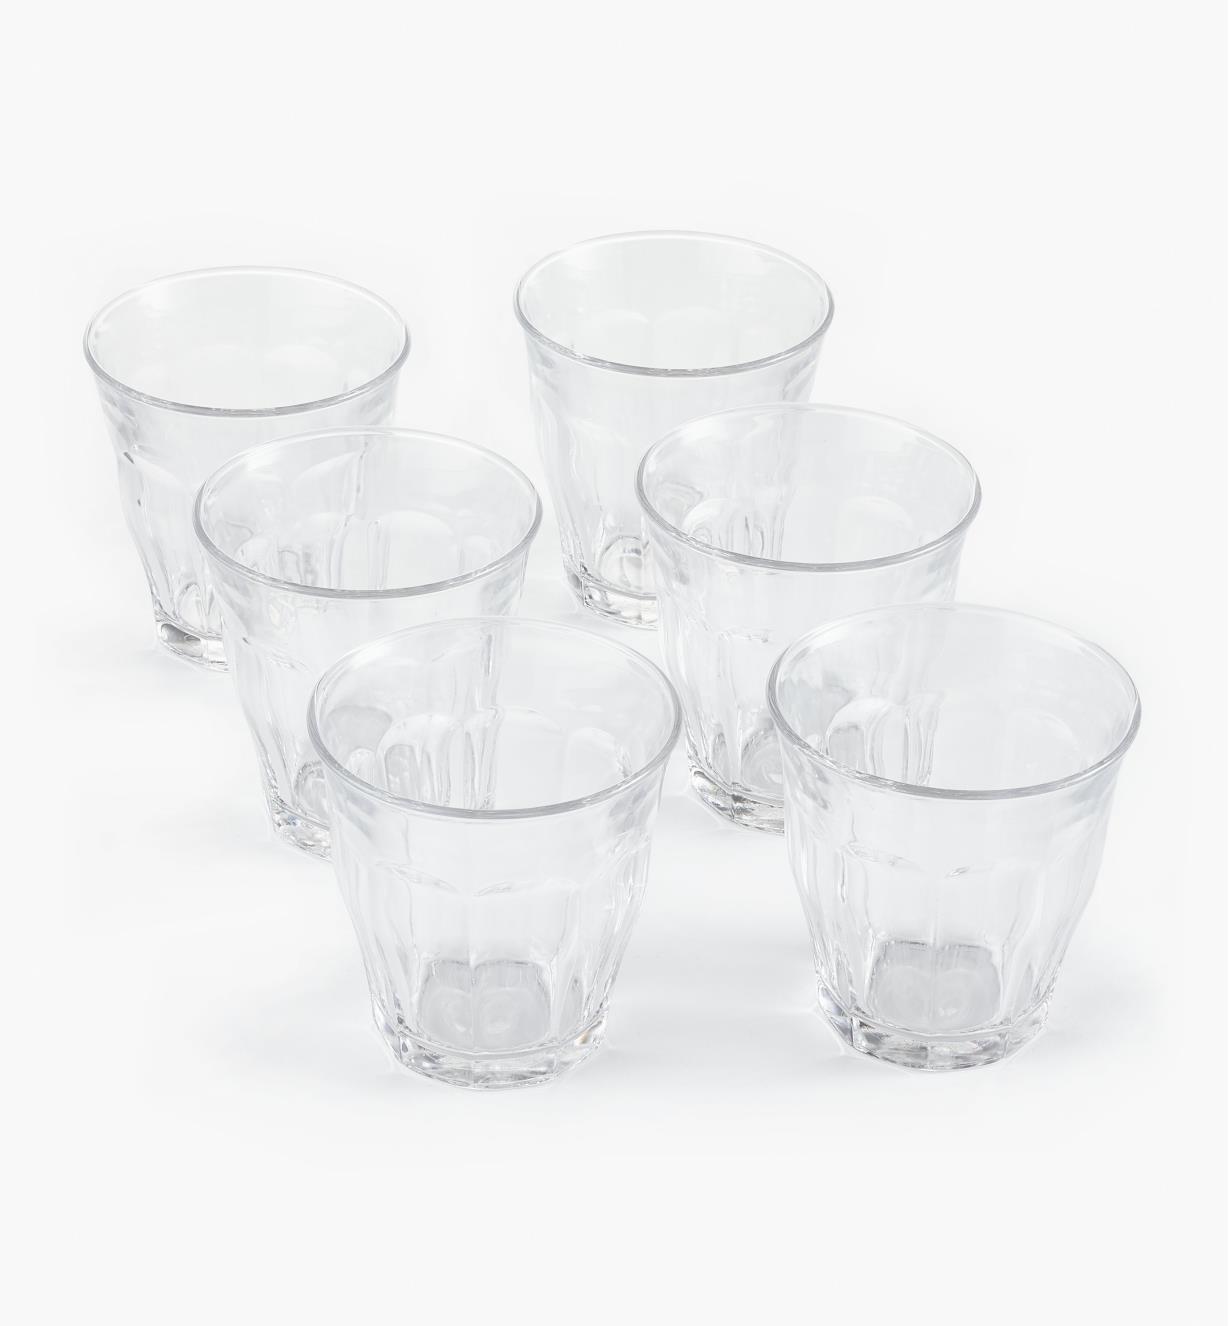 44K0806 - Duralex Picardie 250ml (8.5 fl oz) Glasses, set of 6